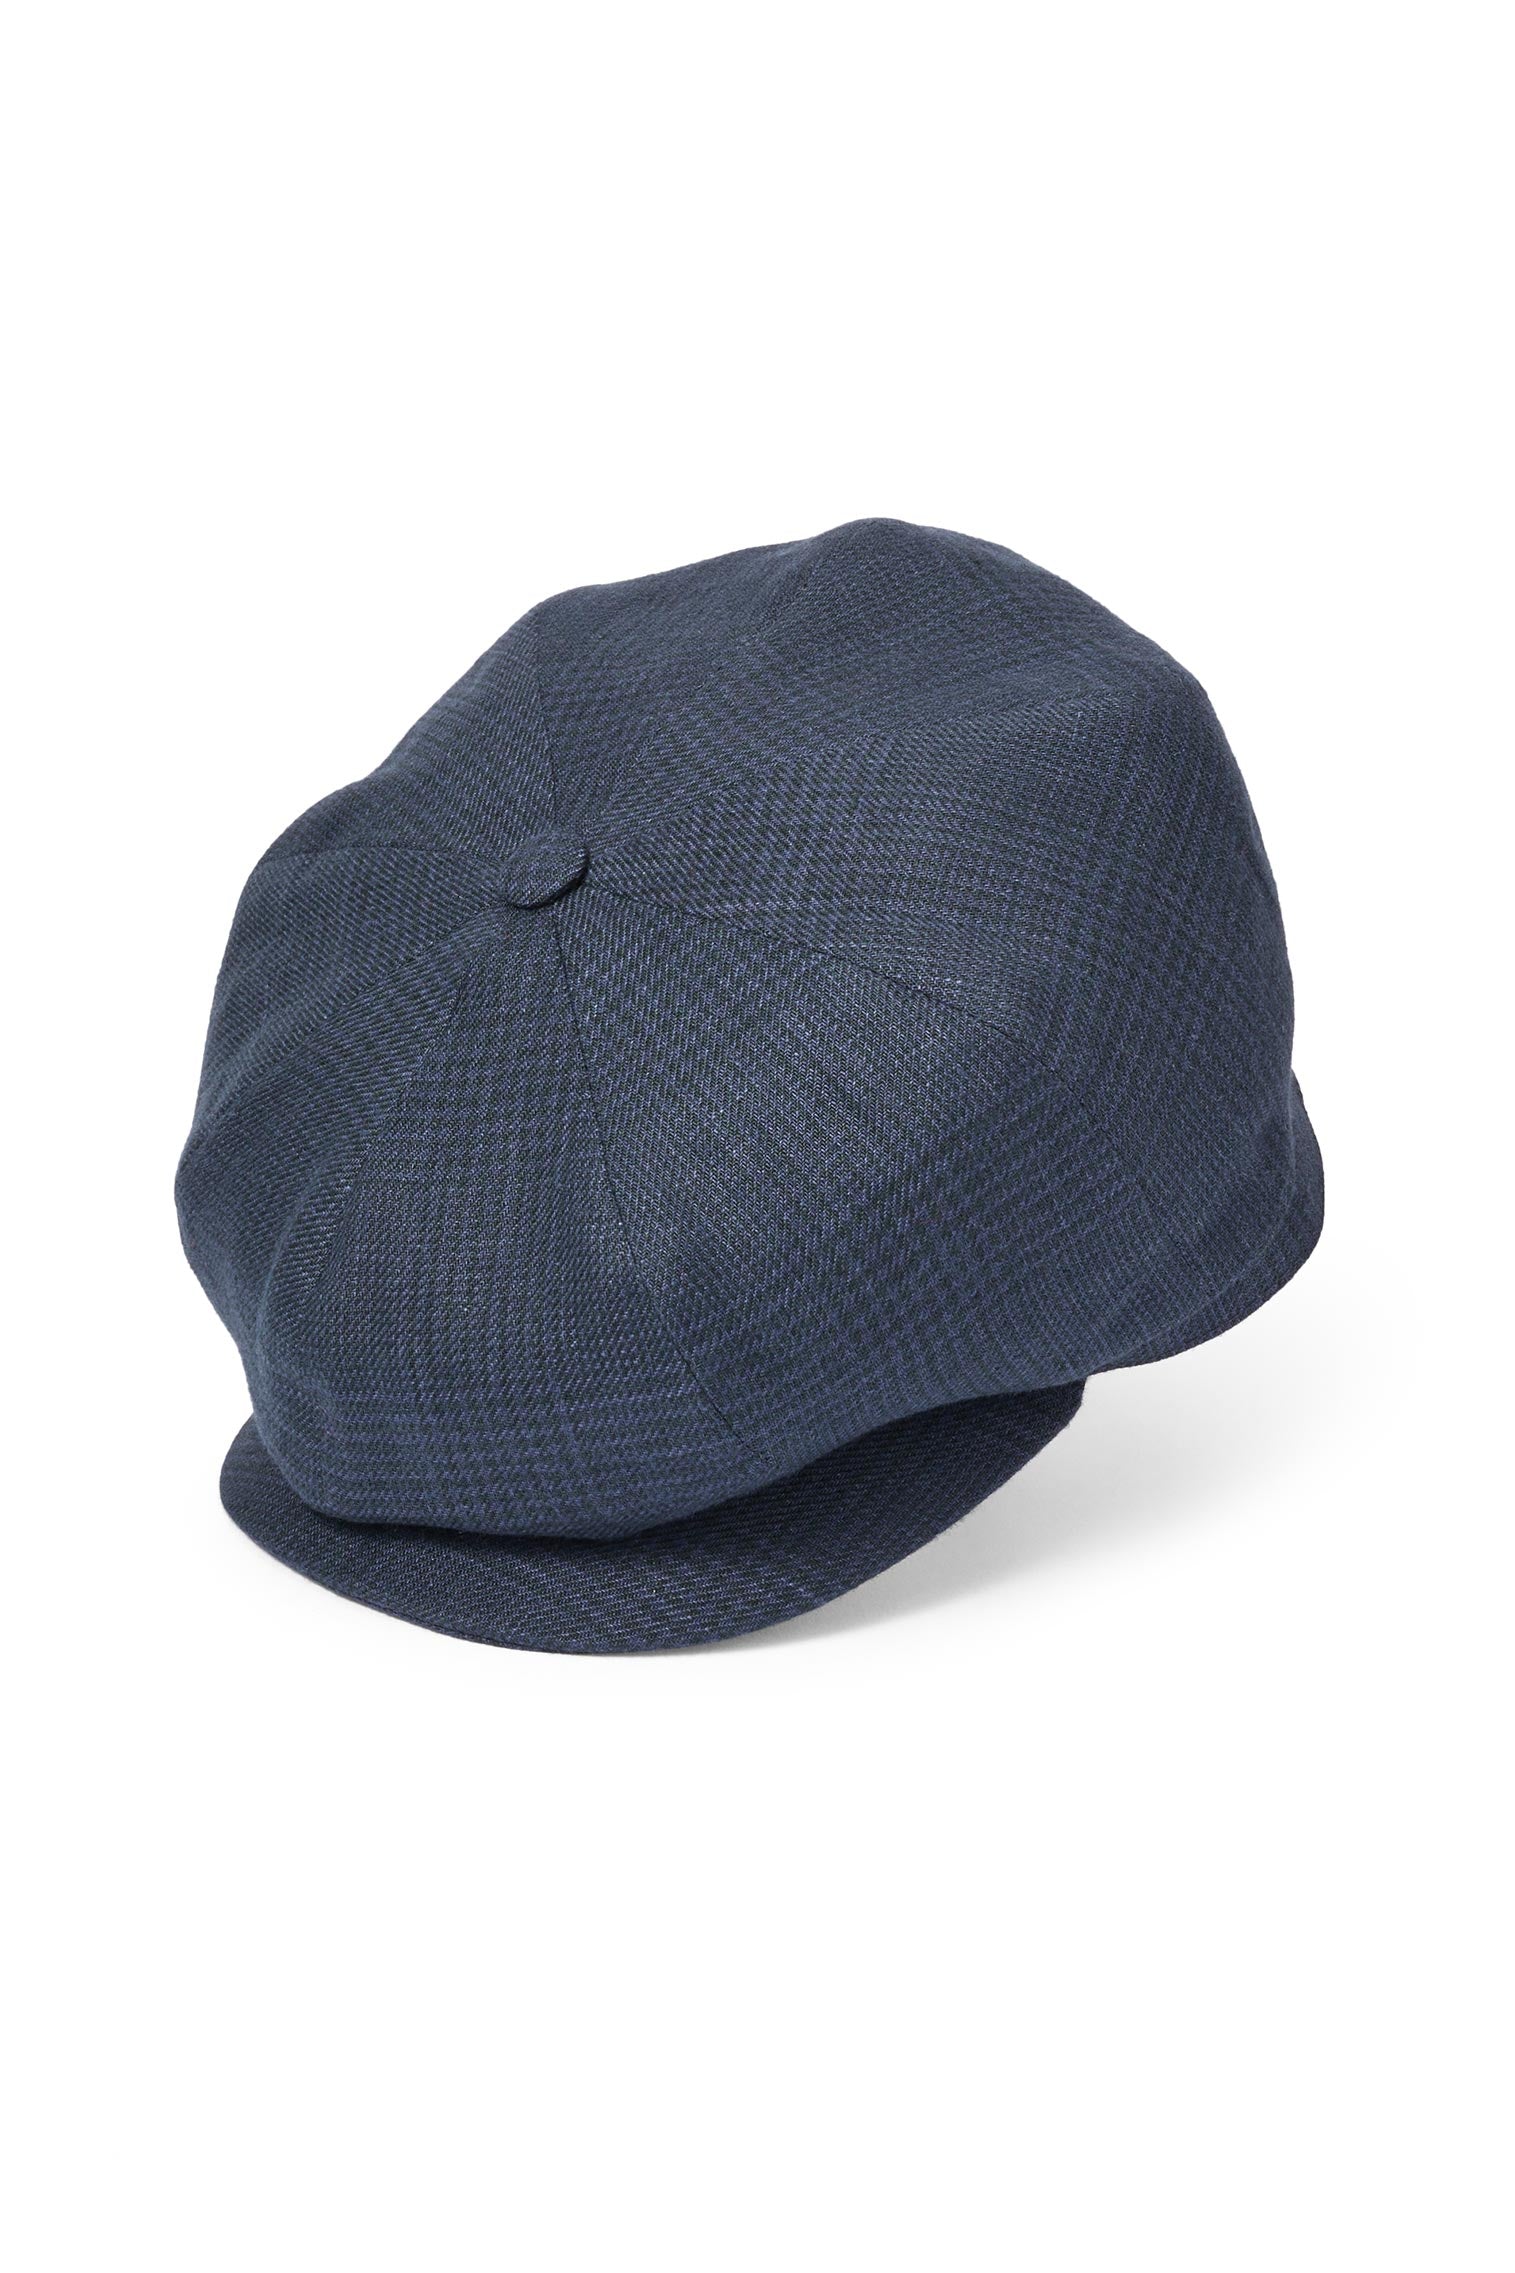 Tremelo Linen Navy Check Bakerboy Cap - Men's Hats - Lock & Co. Hatters London UK